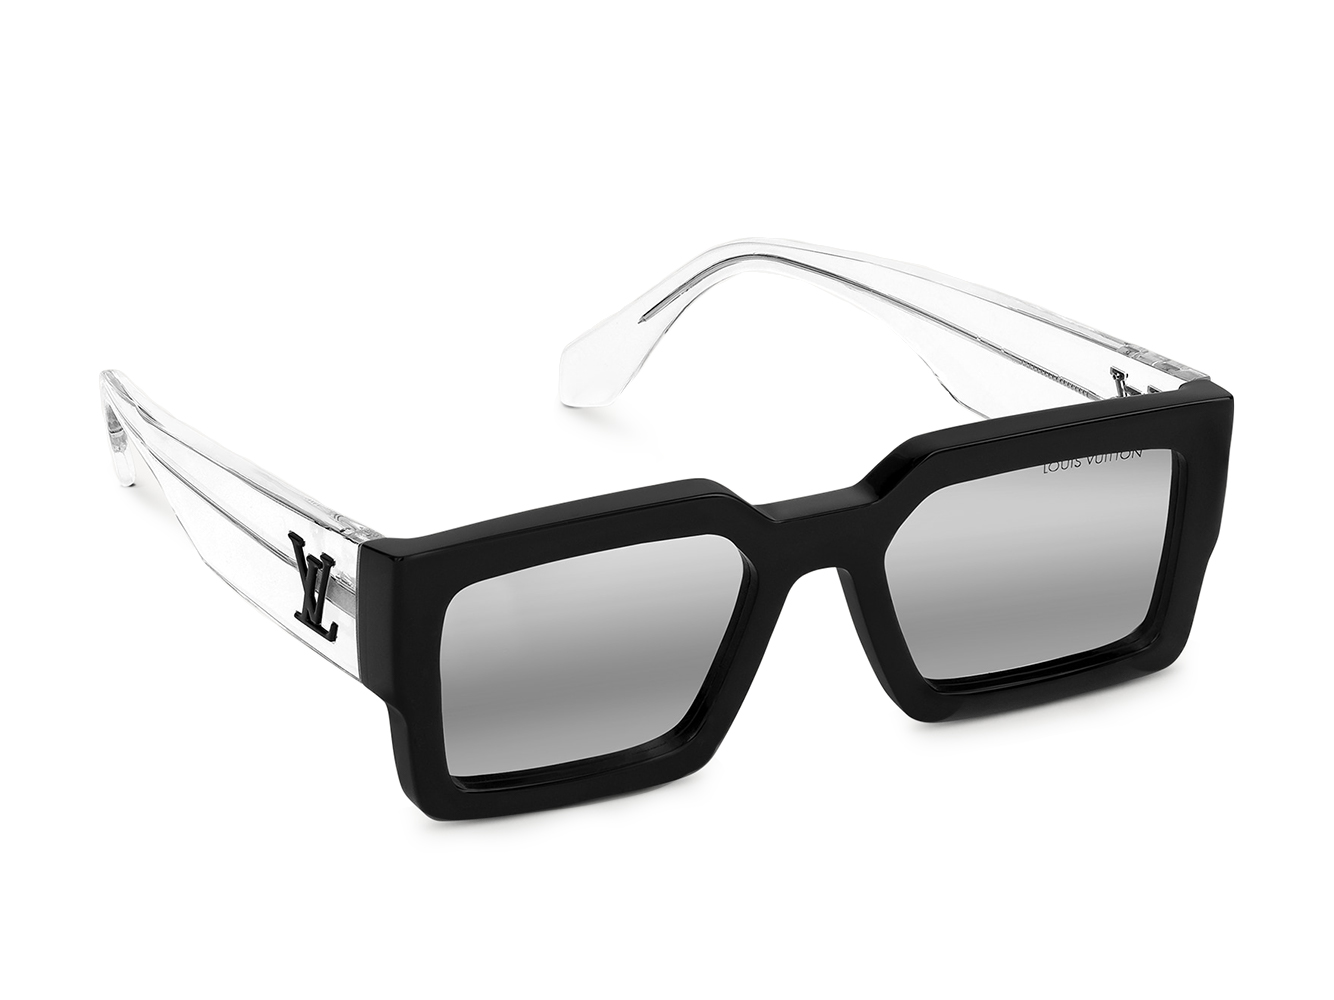 Clockwise Sunglasses S00 - Accessories